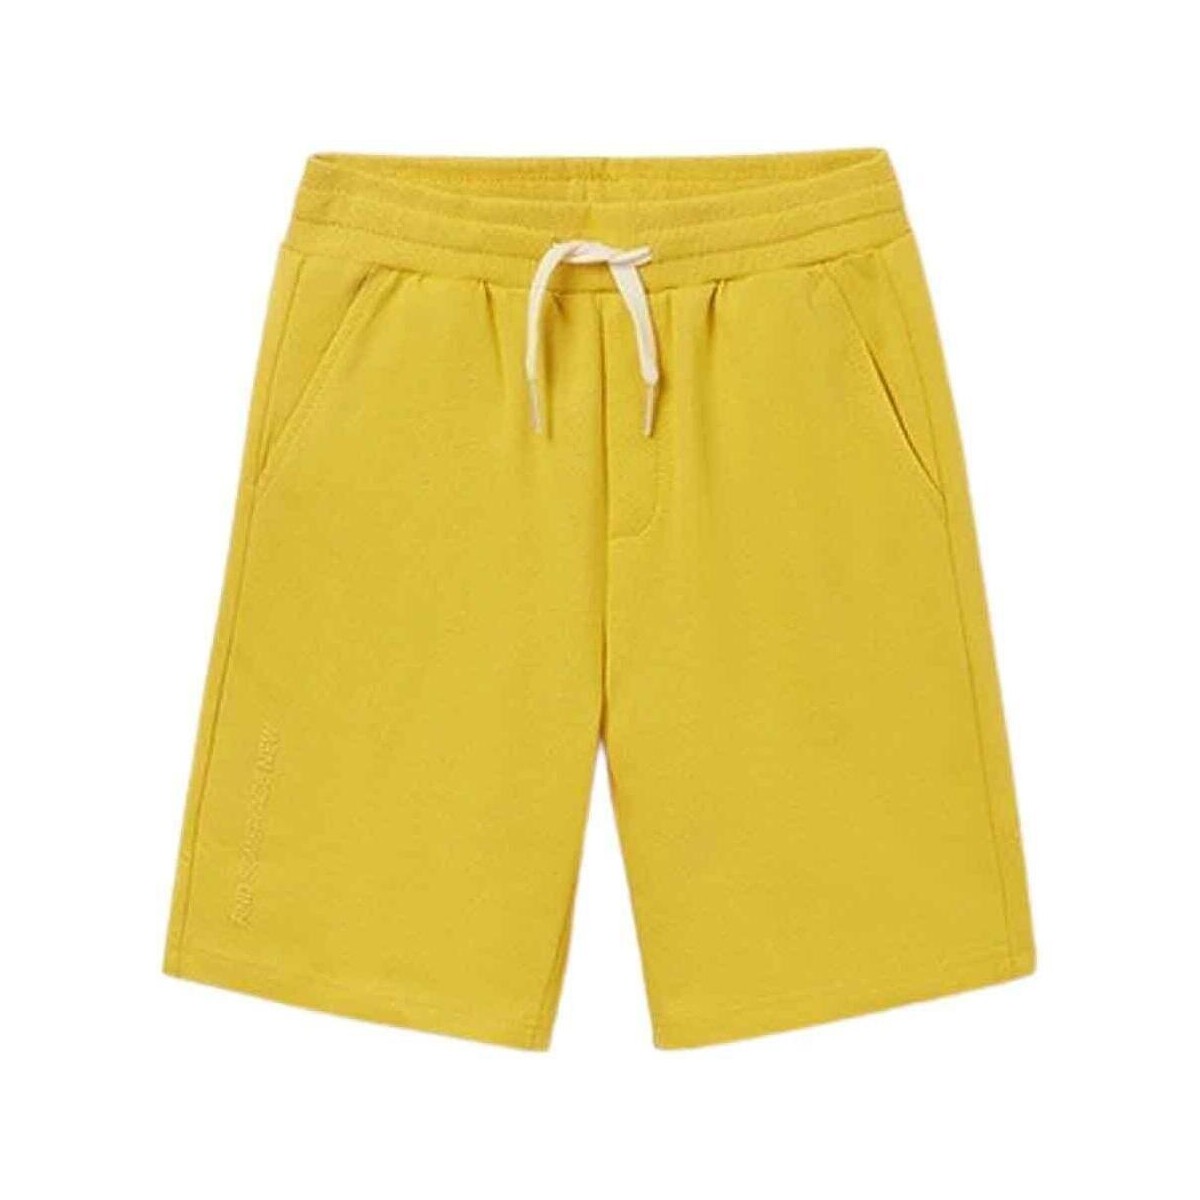 Abbigliamento Bambino Shorts / Bermuda Mayoral  Giallo